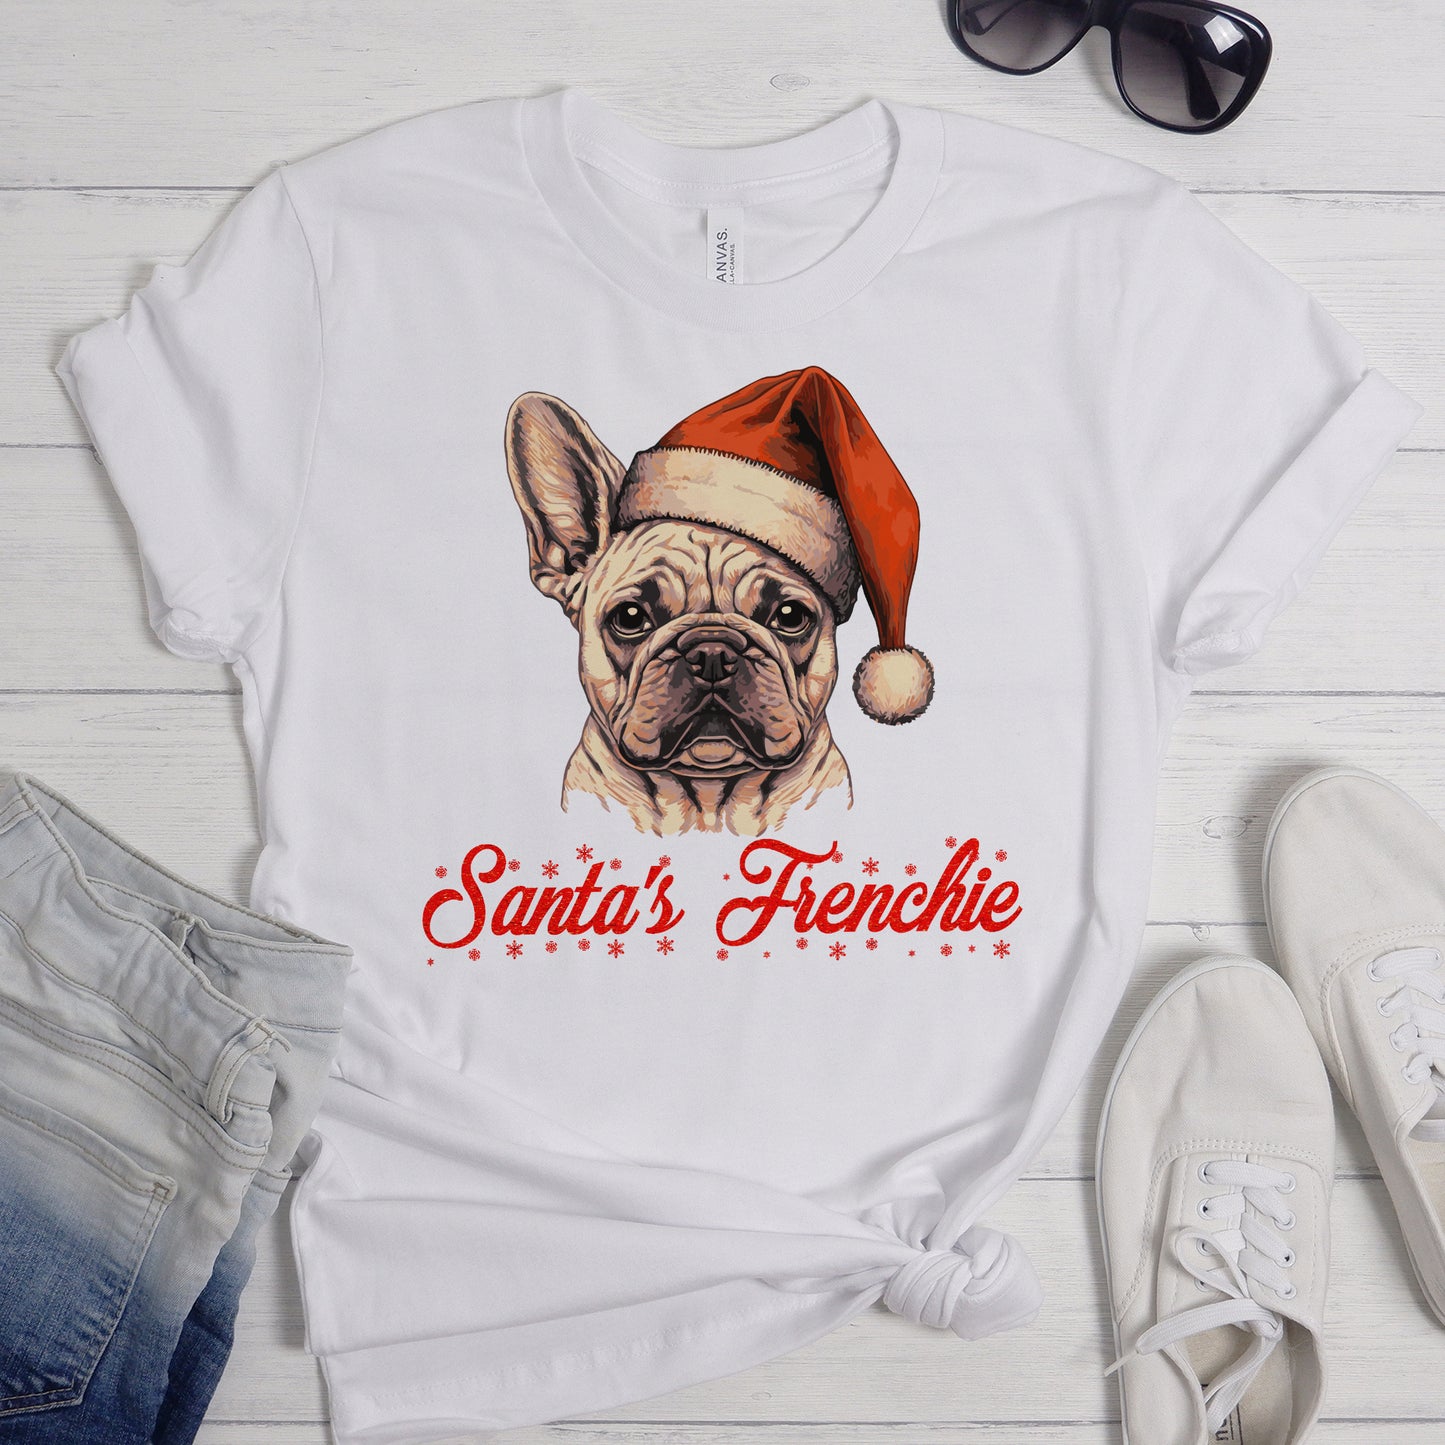 Santa's frenchie - Unisex T-Shirt